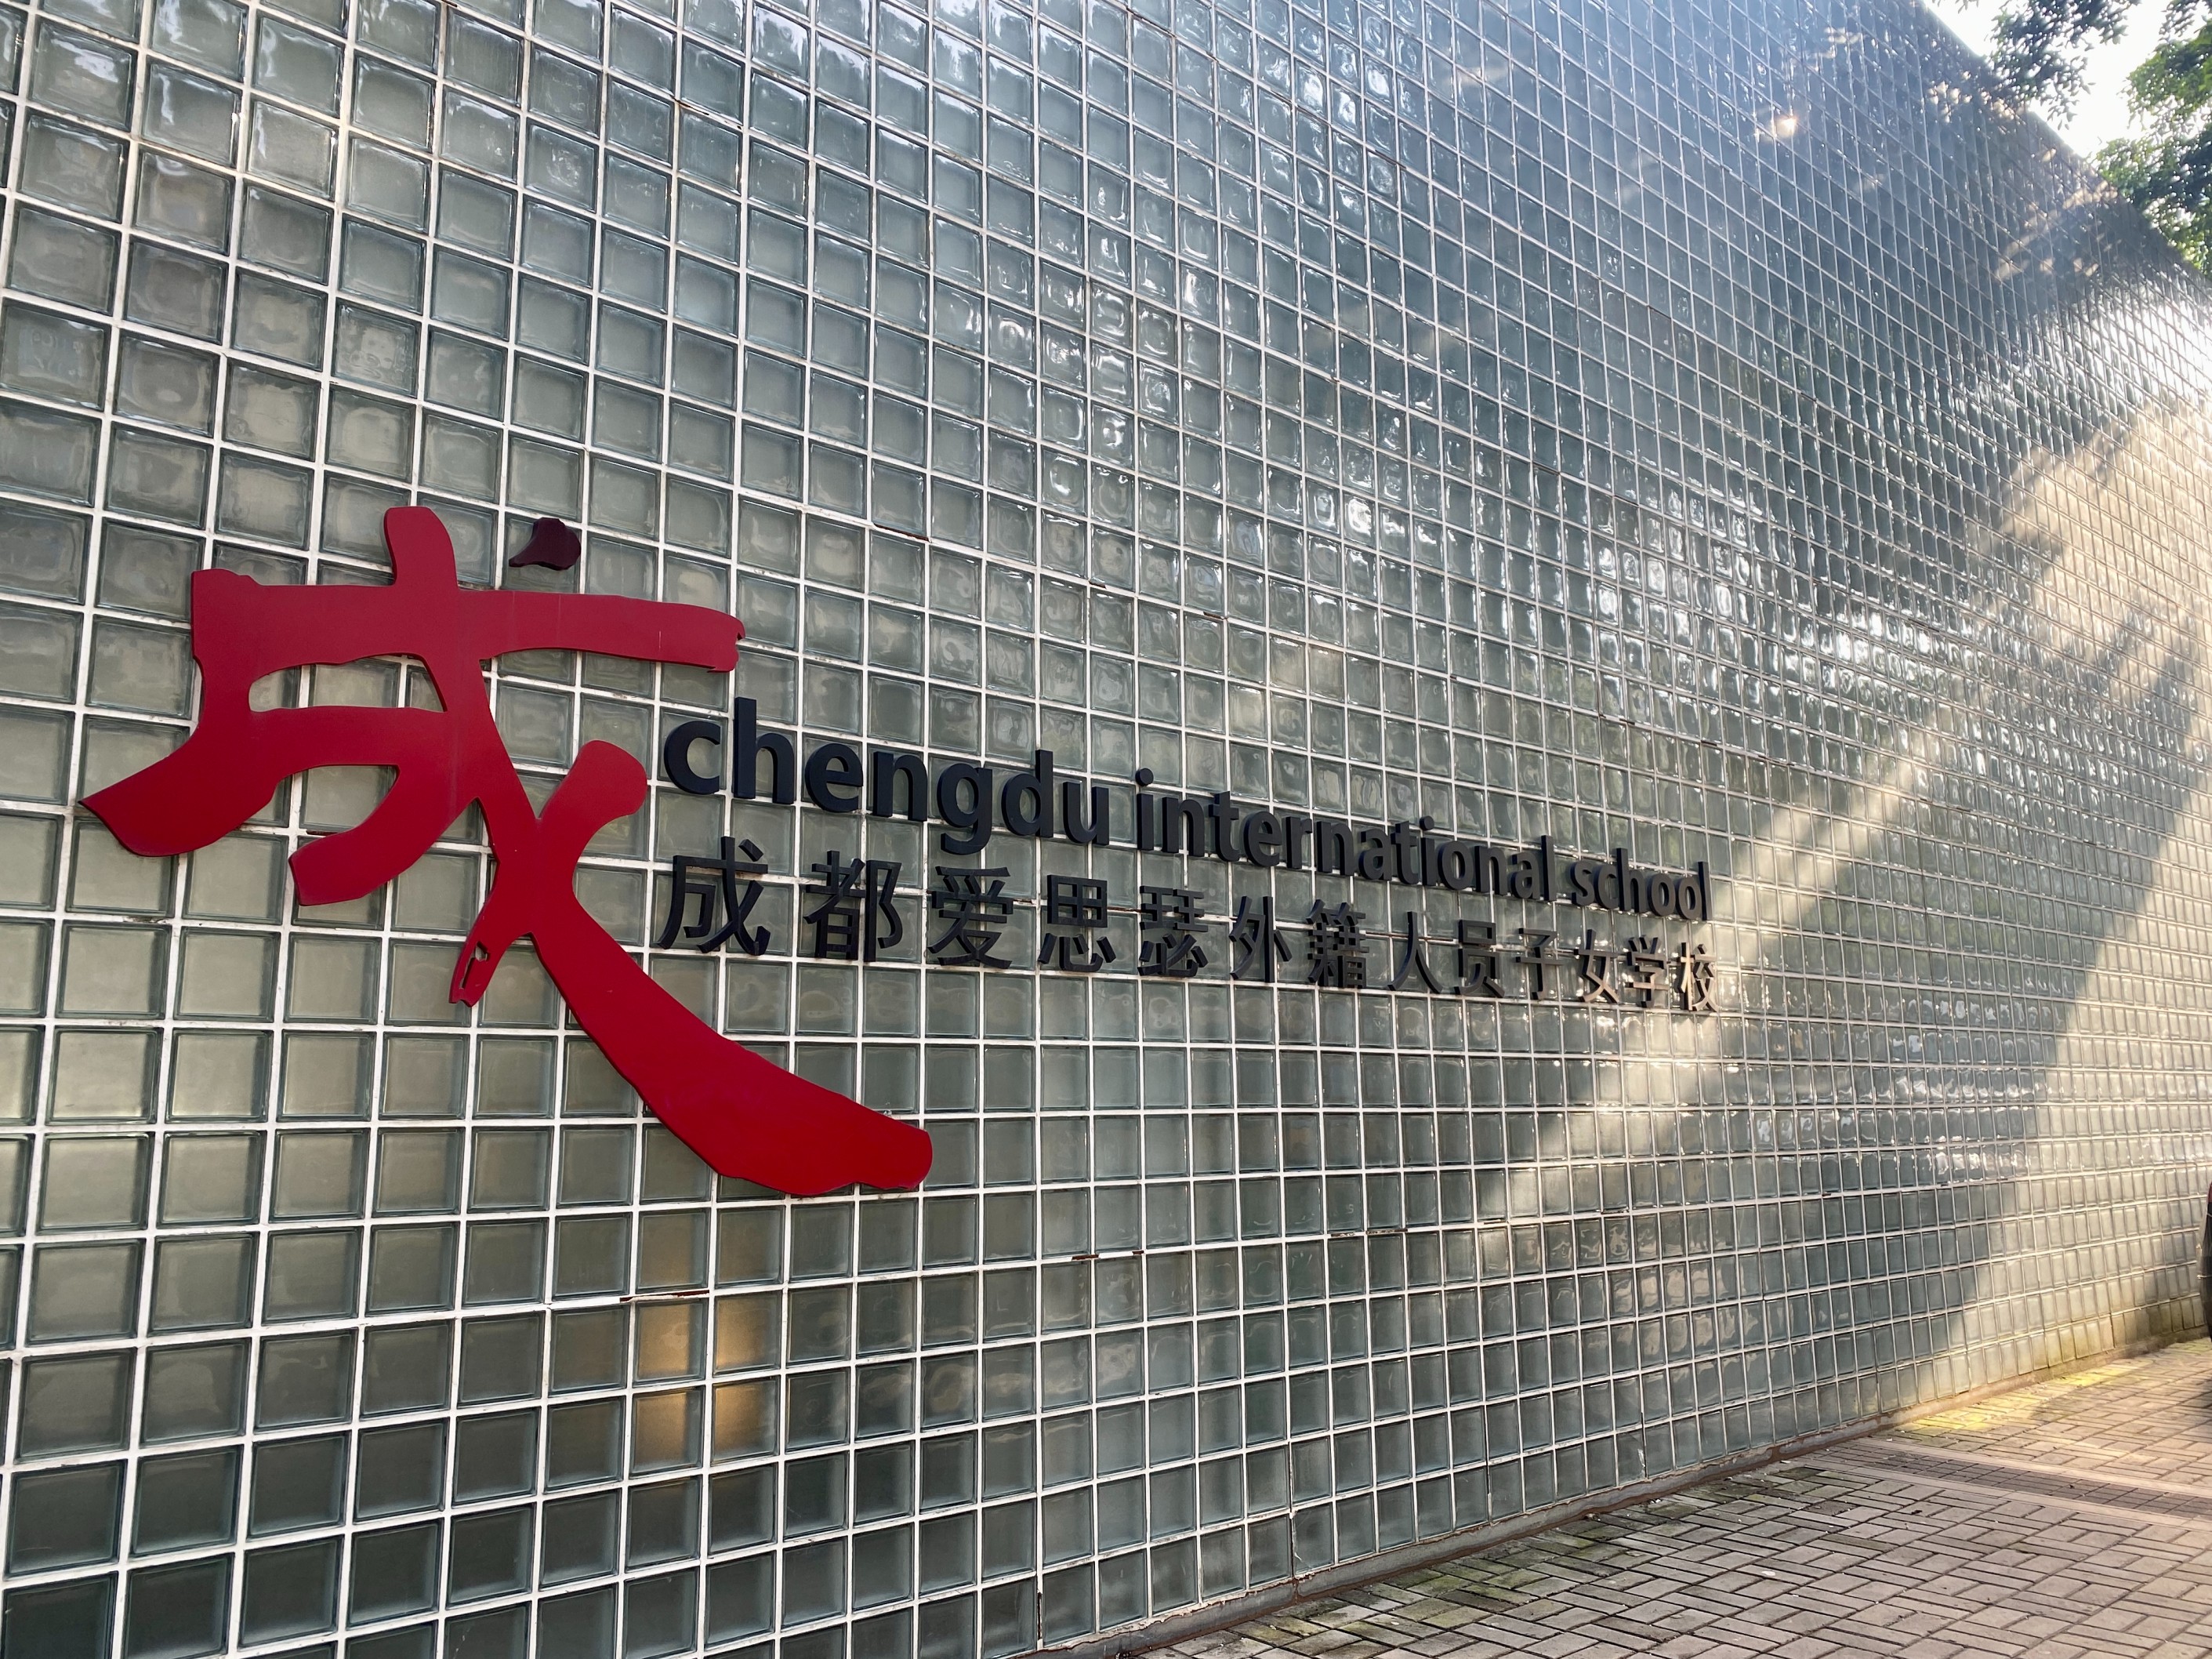 CDIS Chengdu International school chengdu expat website featured image 1